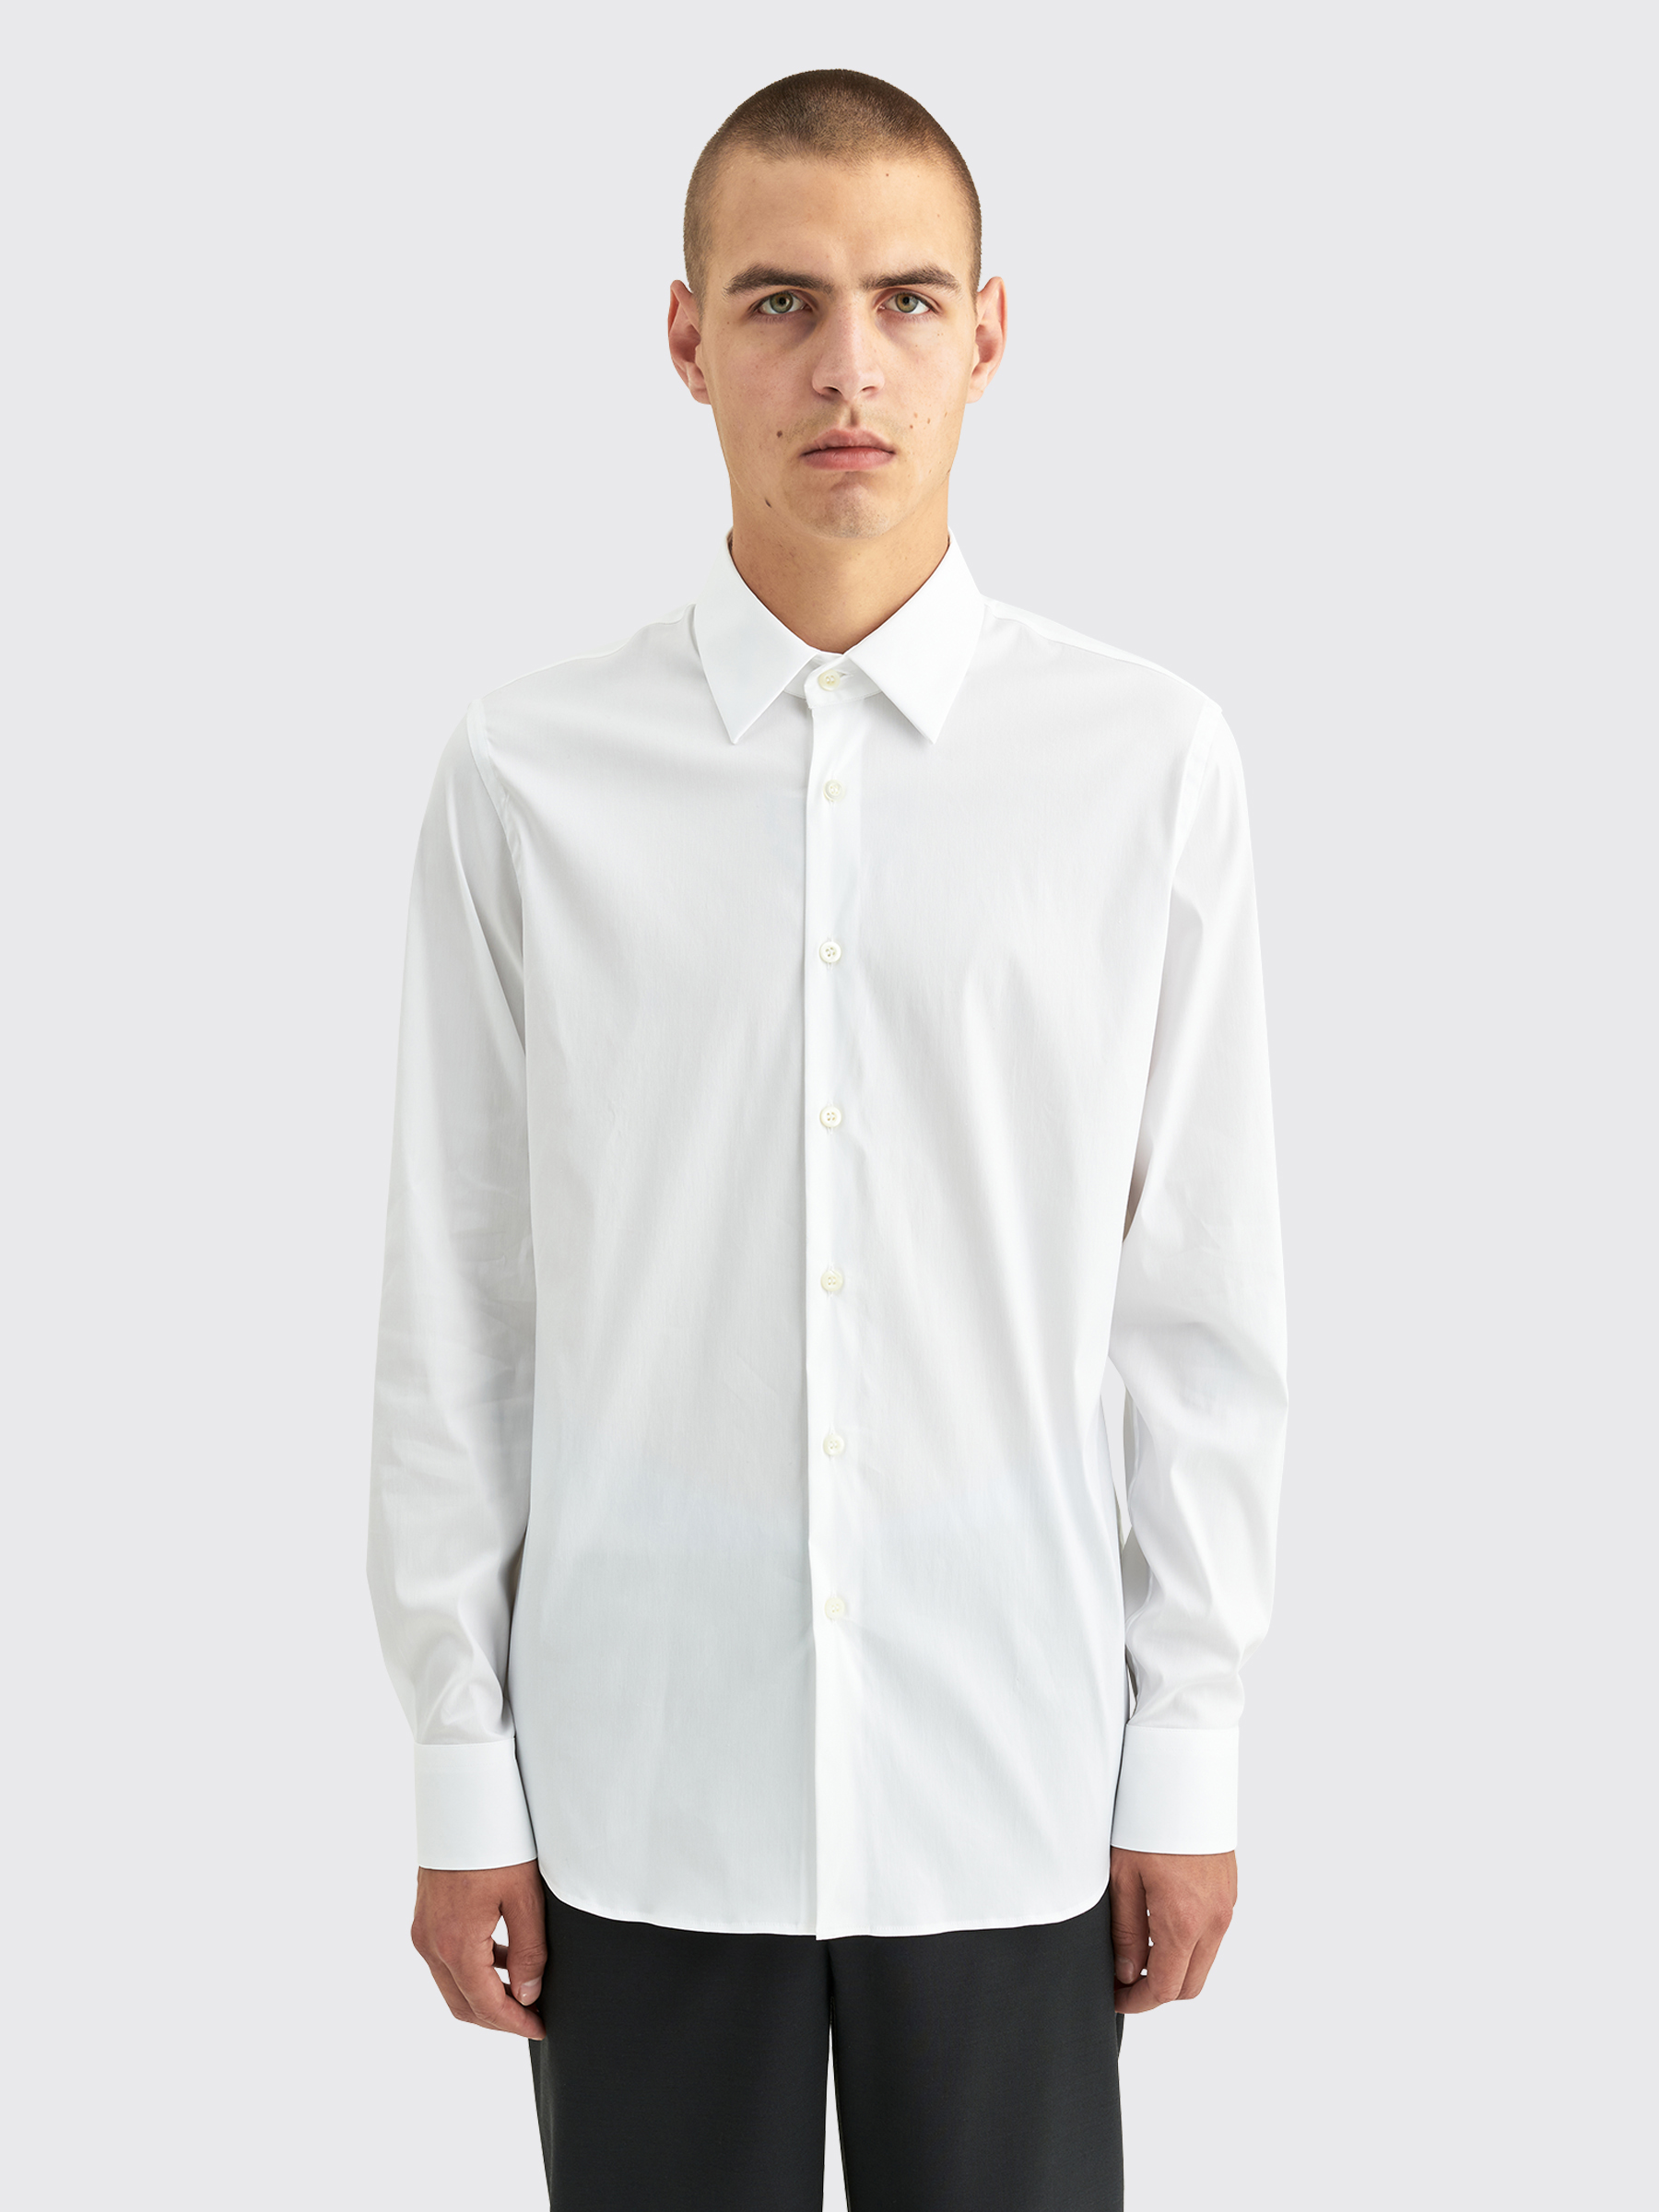 Très Bien - Prada Poplin Stretch Shirt White